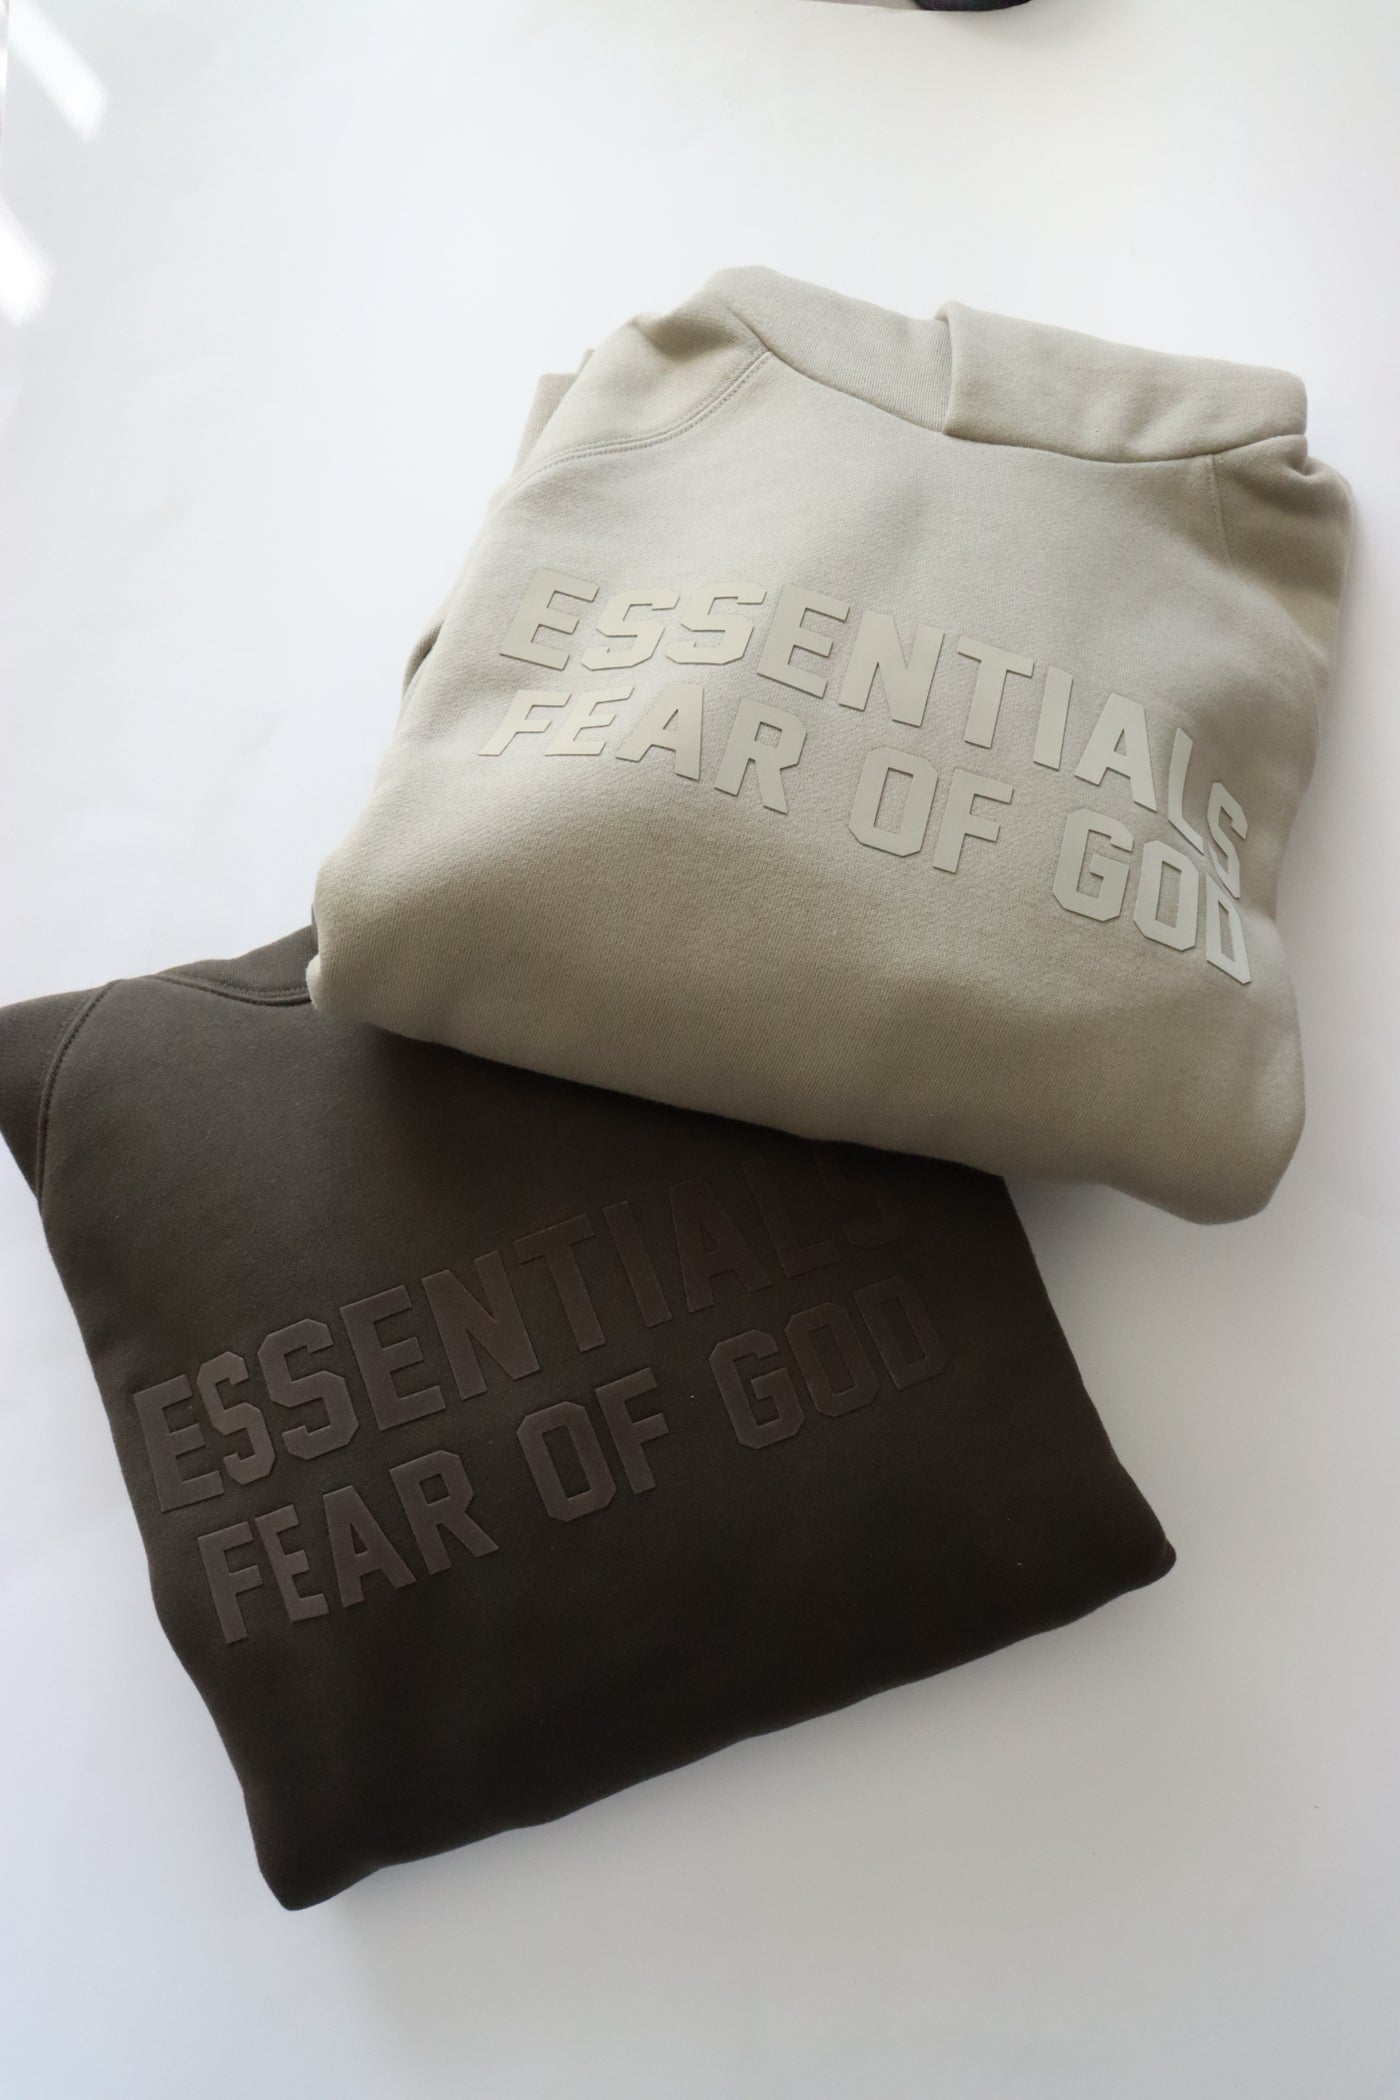 Fear of God Essentials